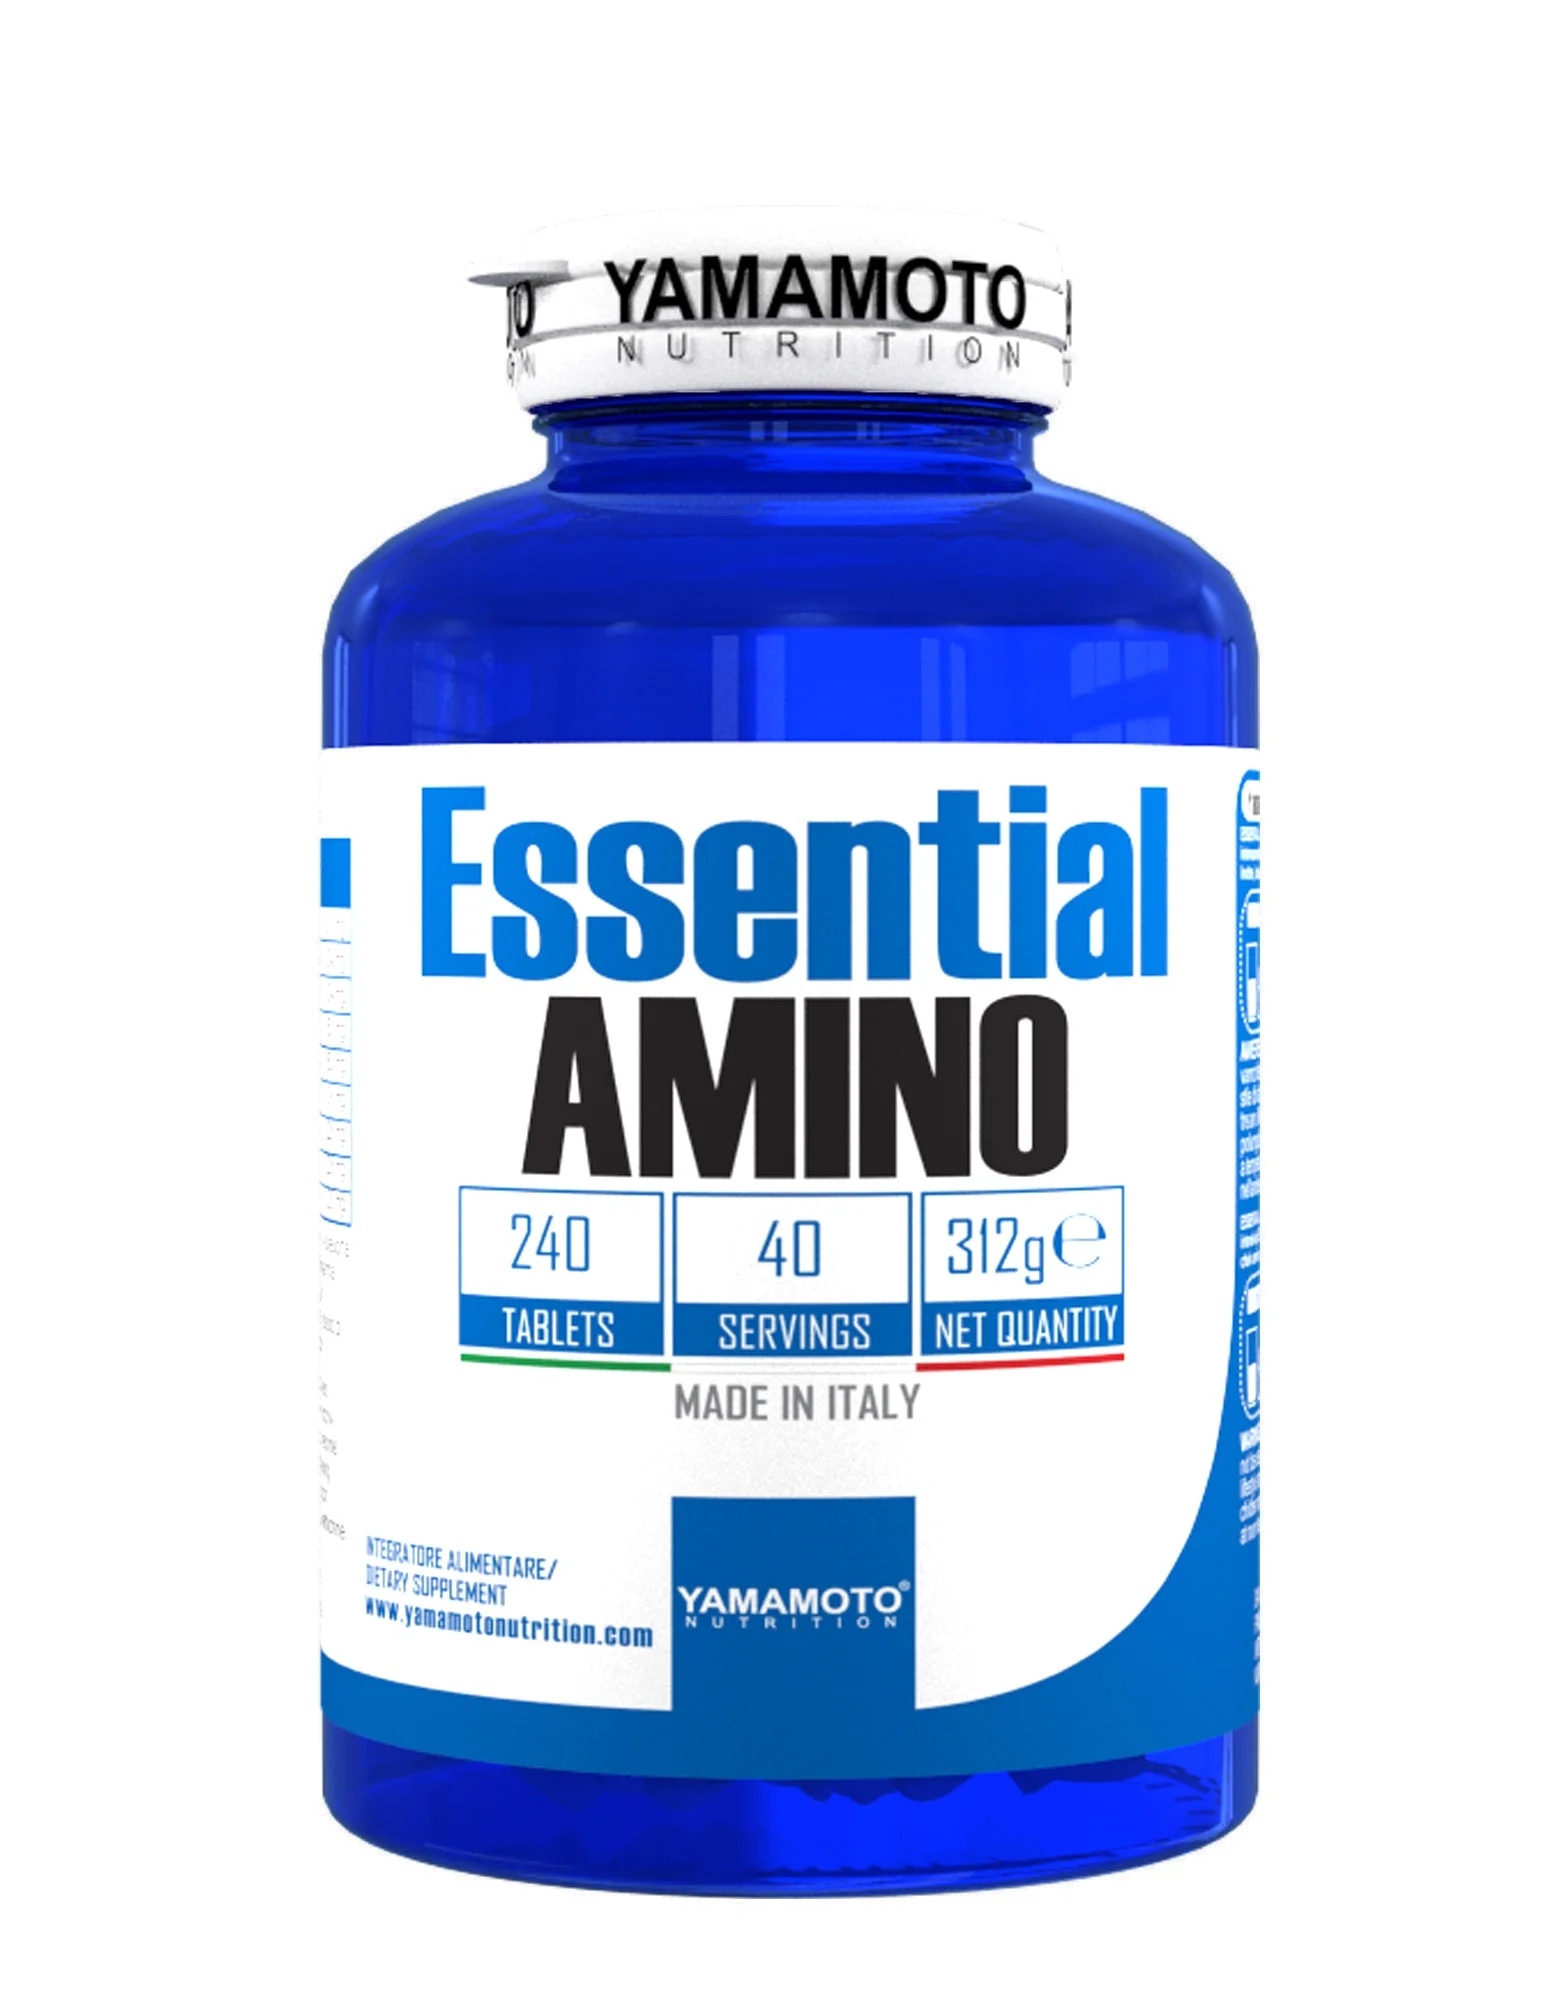 Yamamoto Nutrition Essential Amino 240 capsules / 40 doses / 312 g